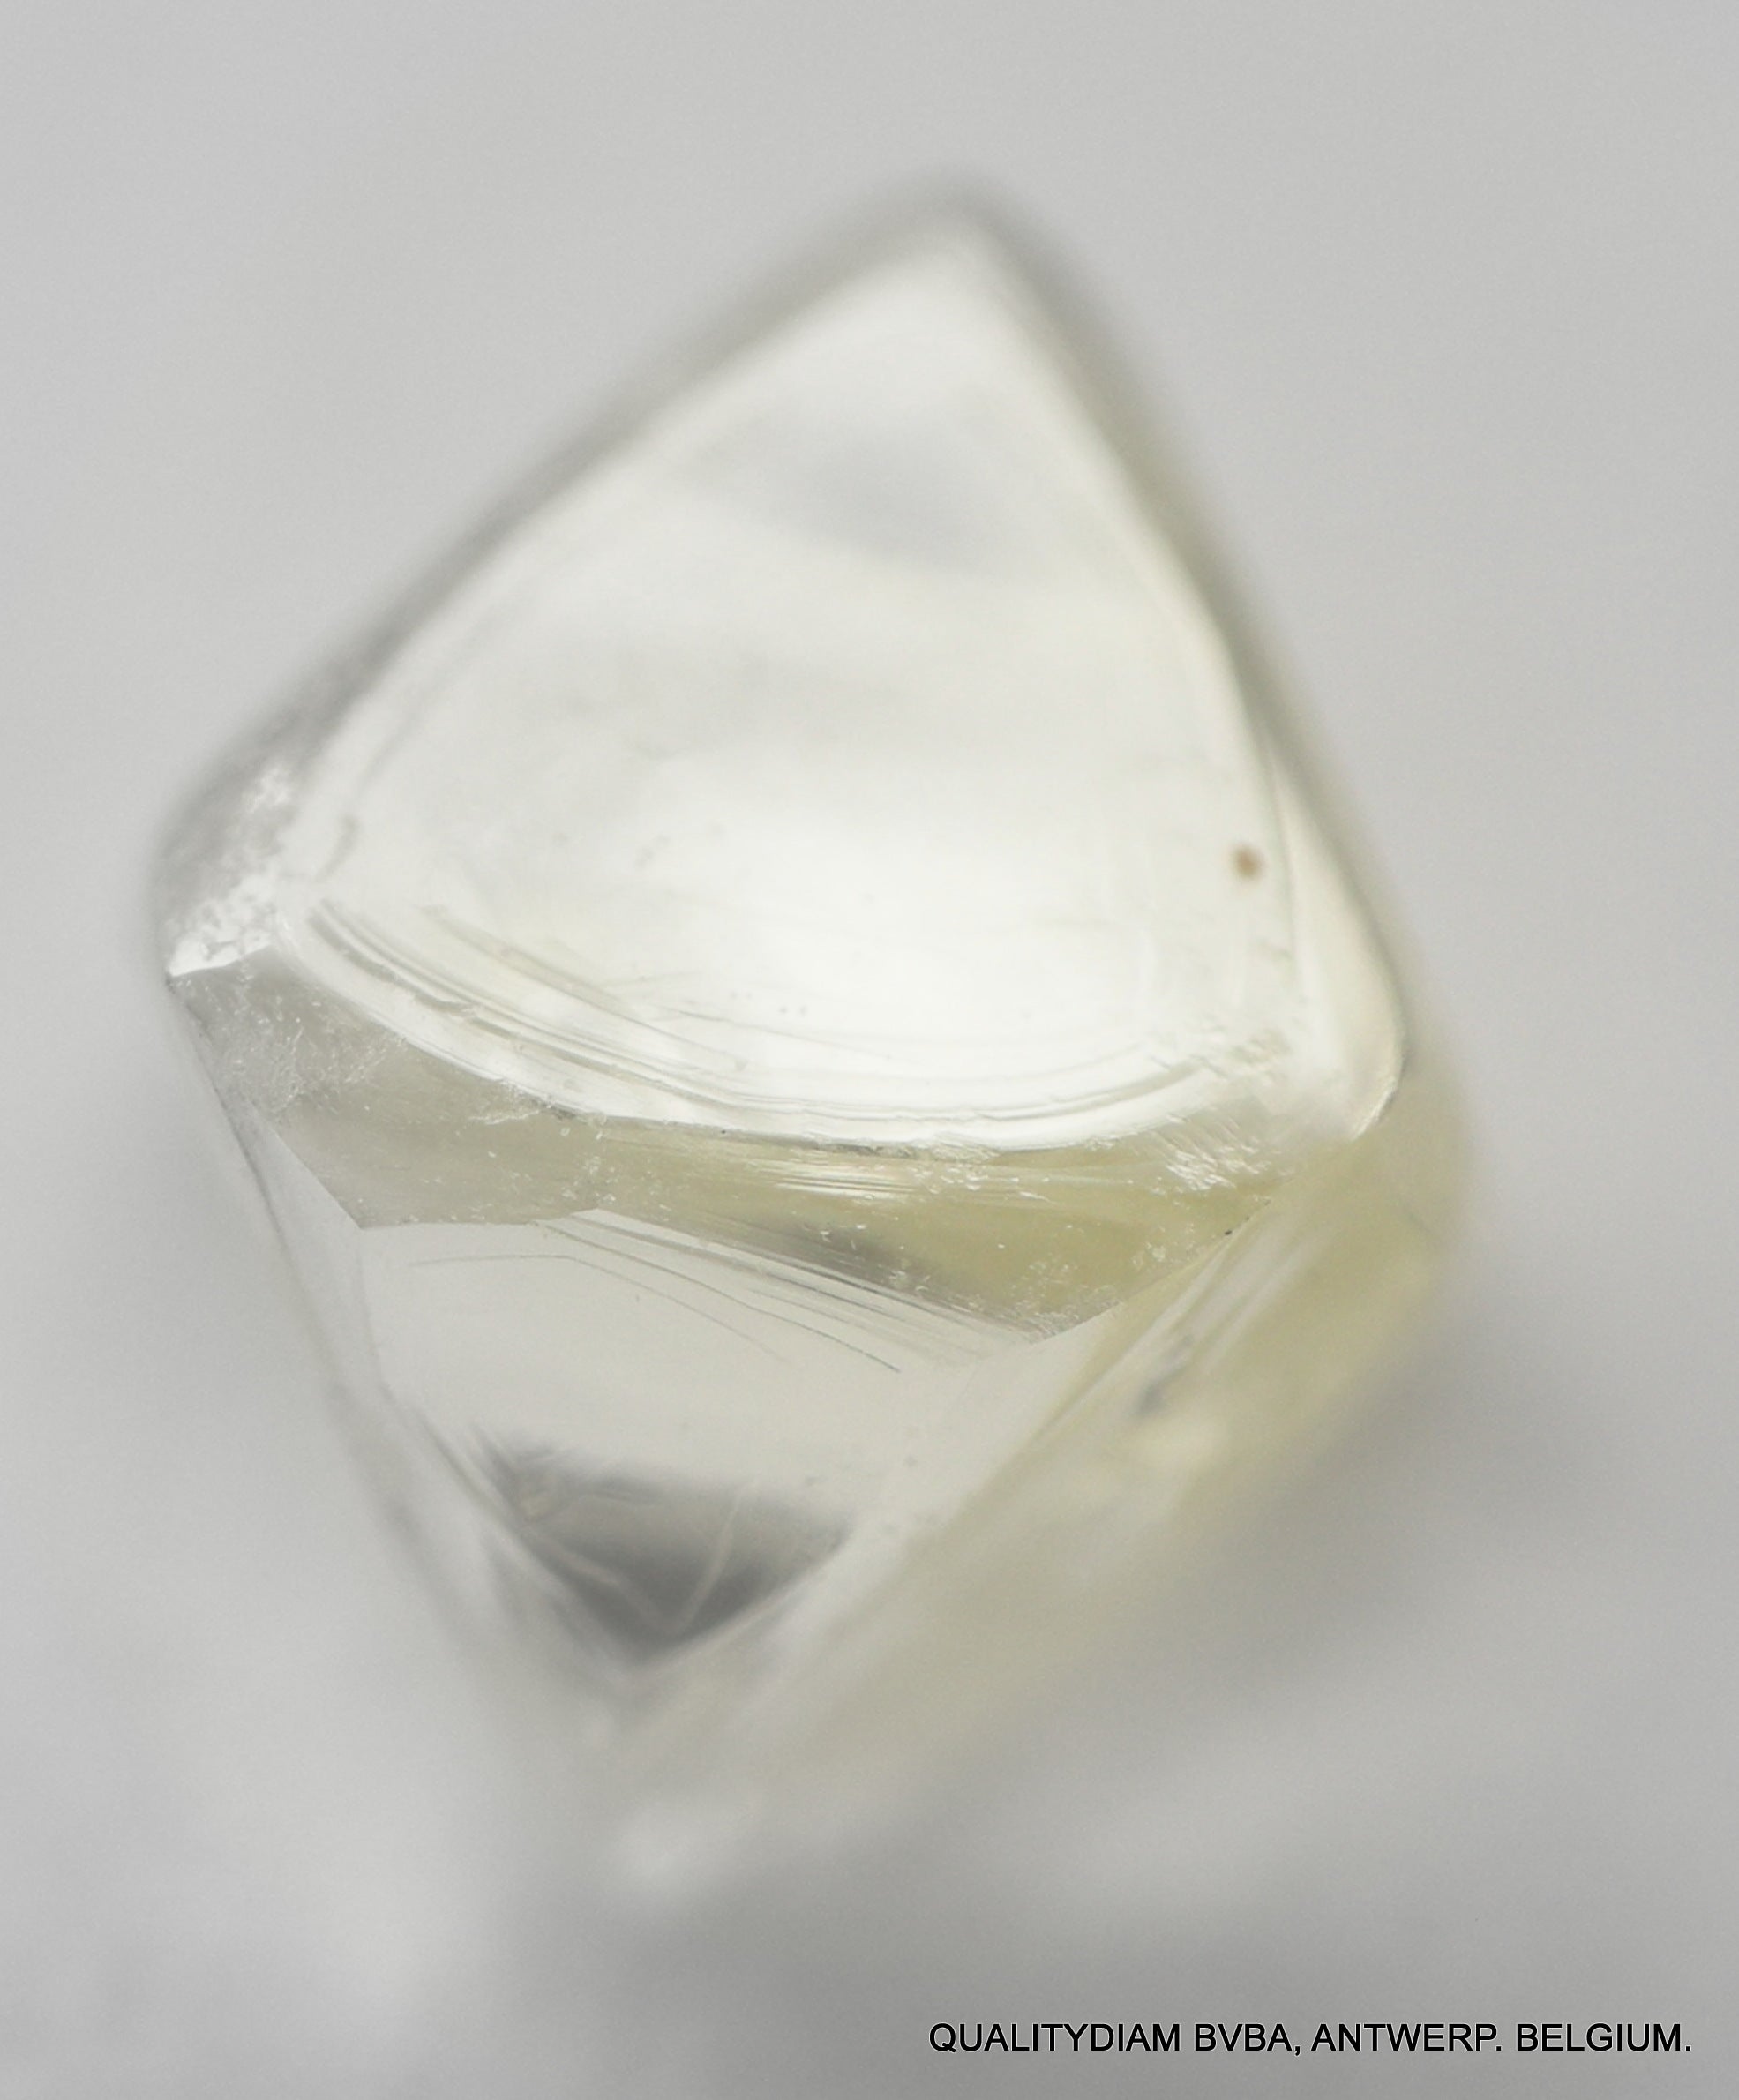 I VS1 Beautiful Octahedron Recently Mined Uncut Natural Diamond